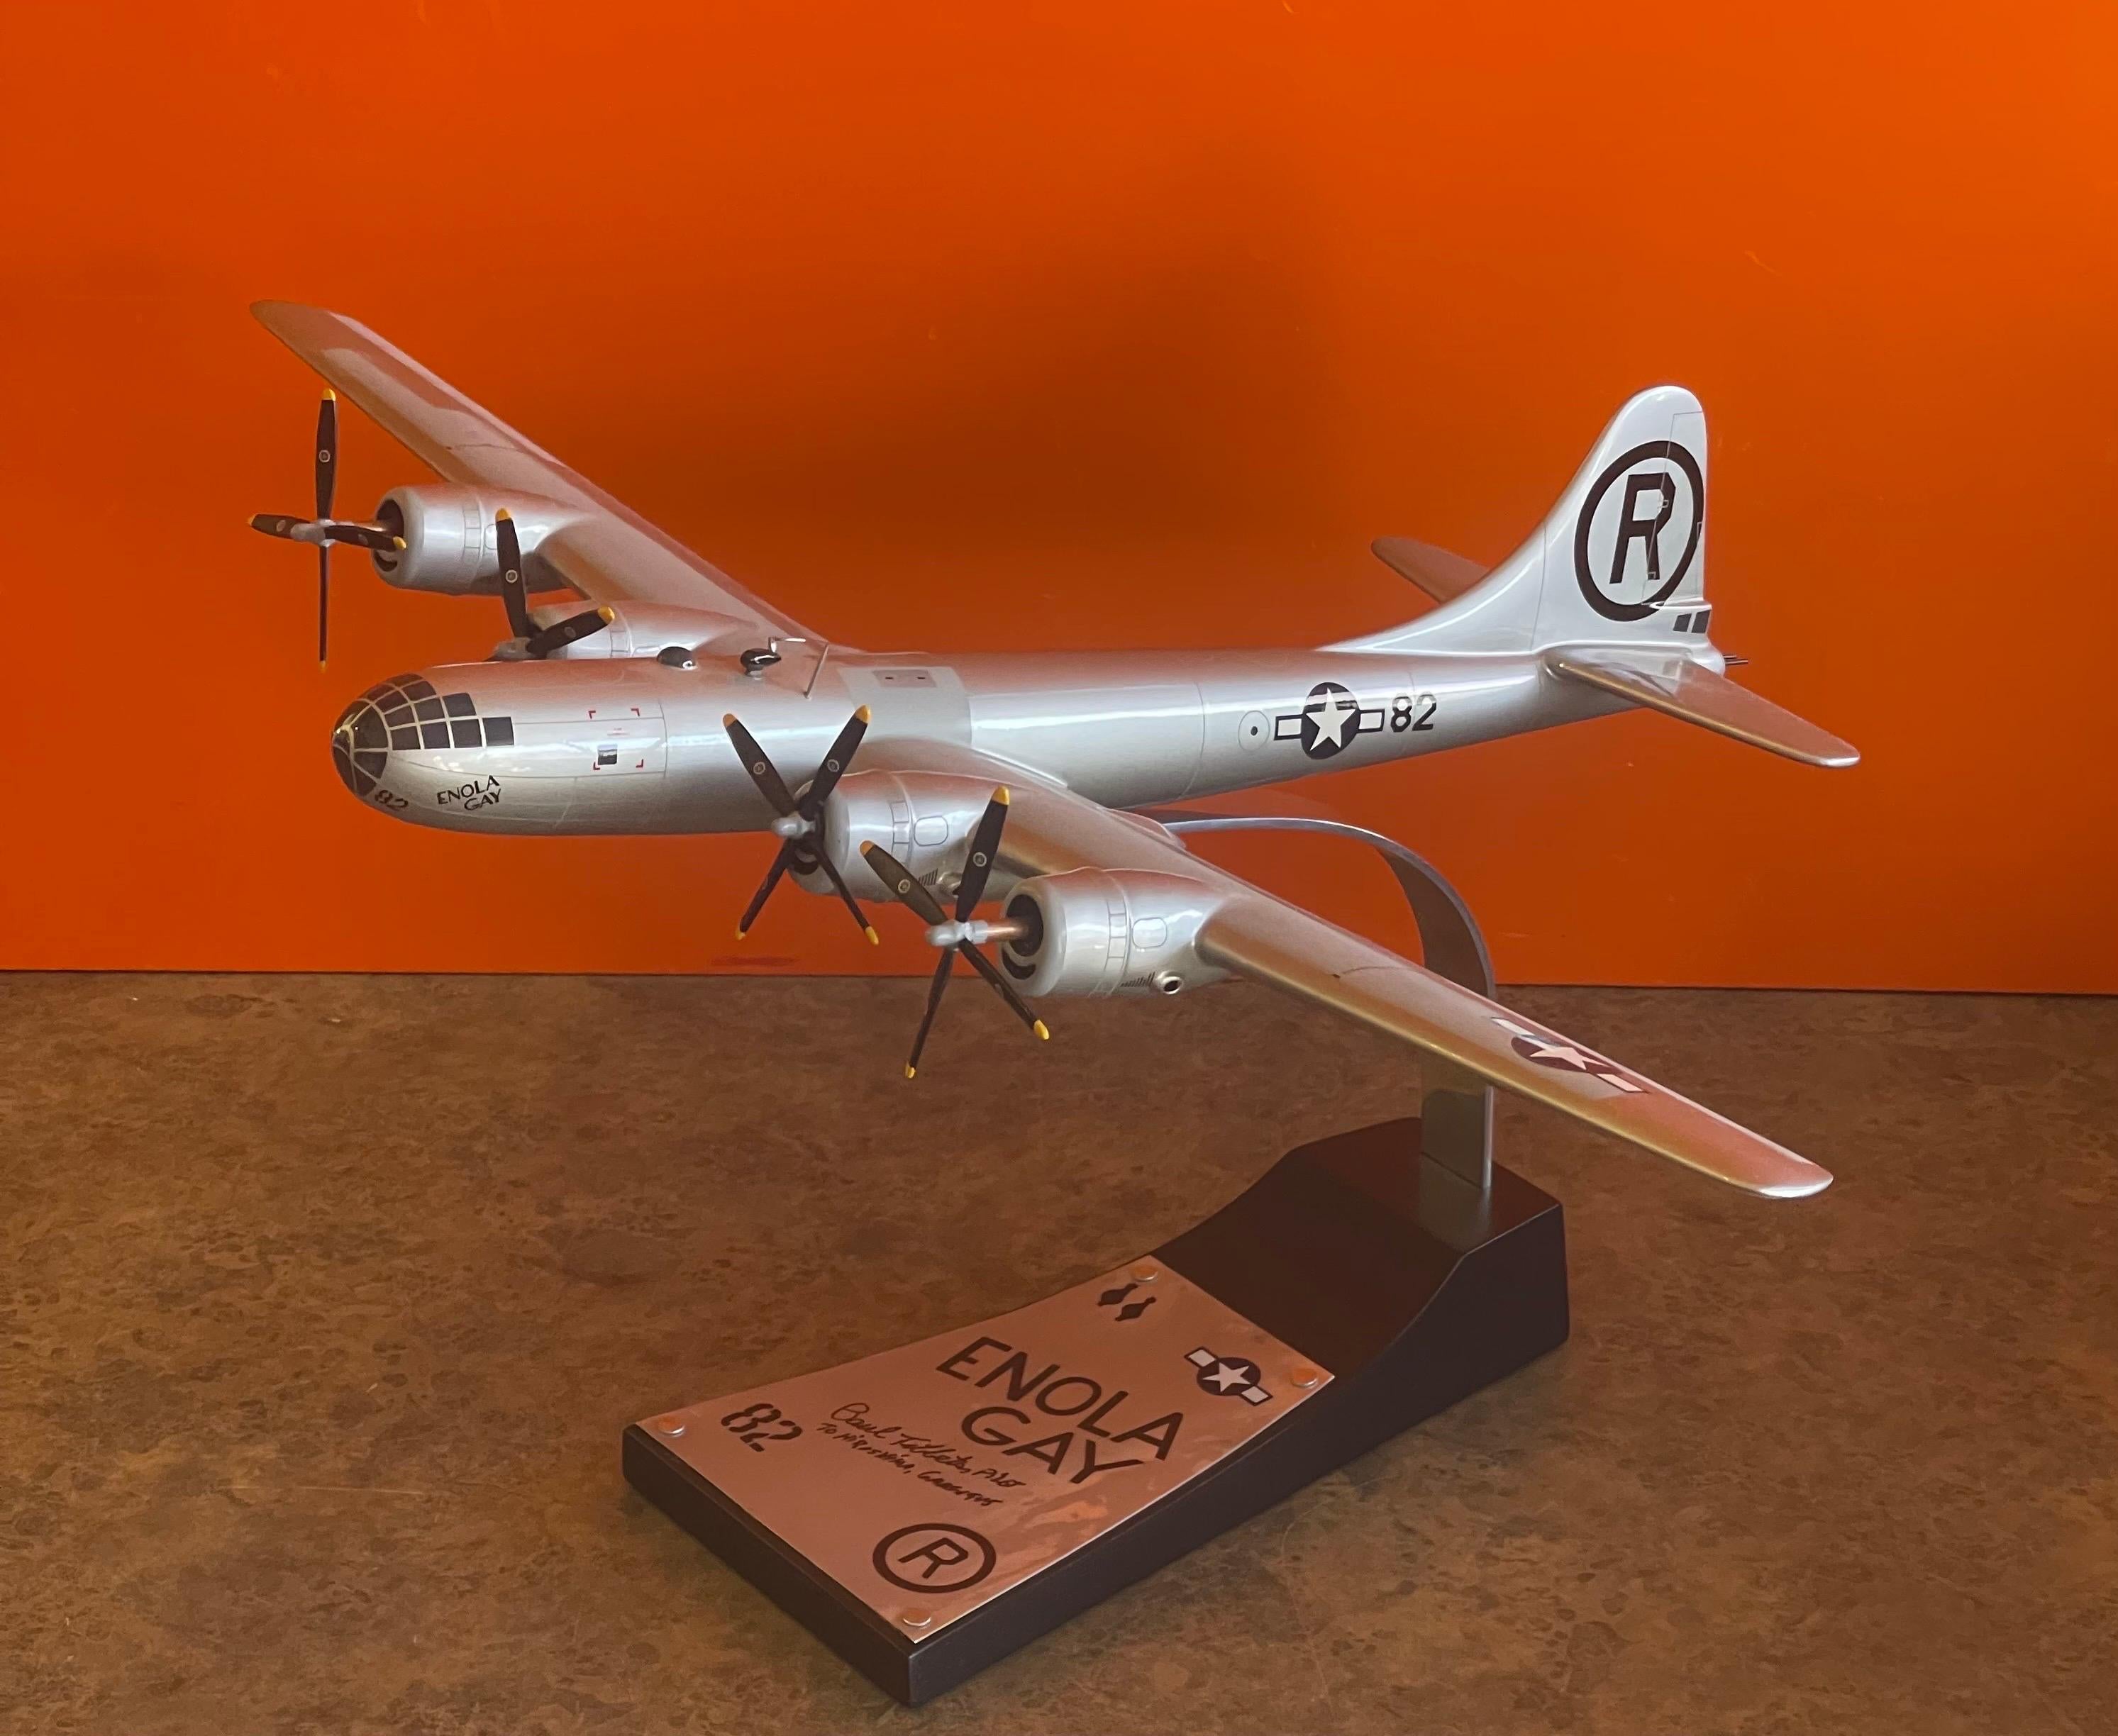 Extrem detailgetreues Modell des Bombers Boeing B-29 Superfortress „Enola Gay“ mit Signatur des Piloten Paul Tibbets, circa 2000er Jahre. Die Enola Gay wurde nach Tibbets Mutter, Enola Gay Tibbets, benannt. Am 6. August 1945, in der Endphase des